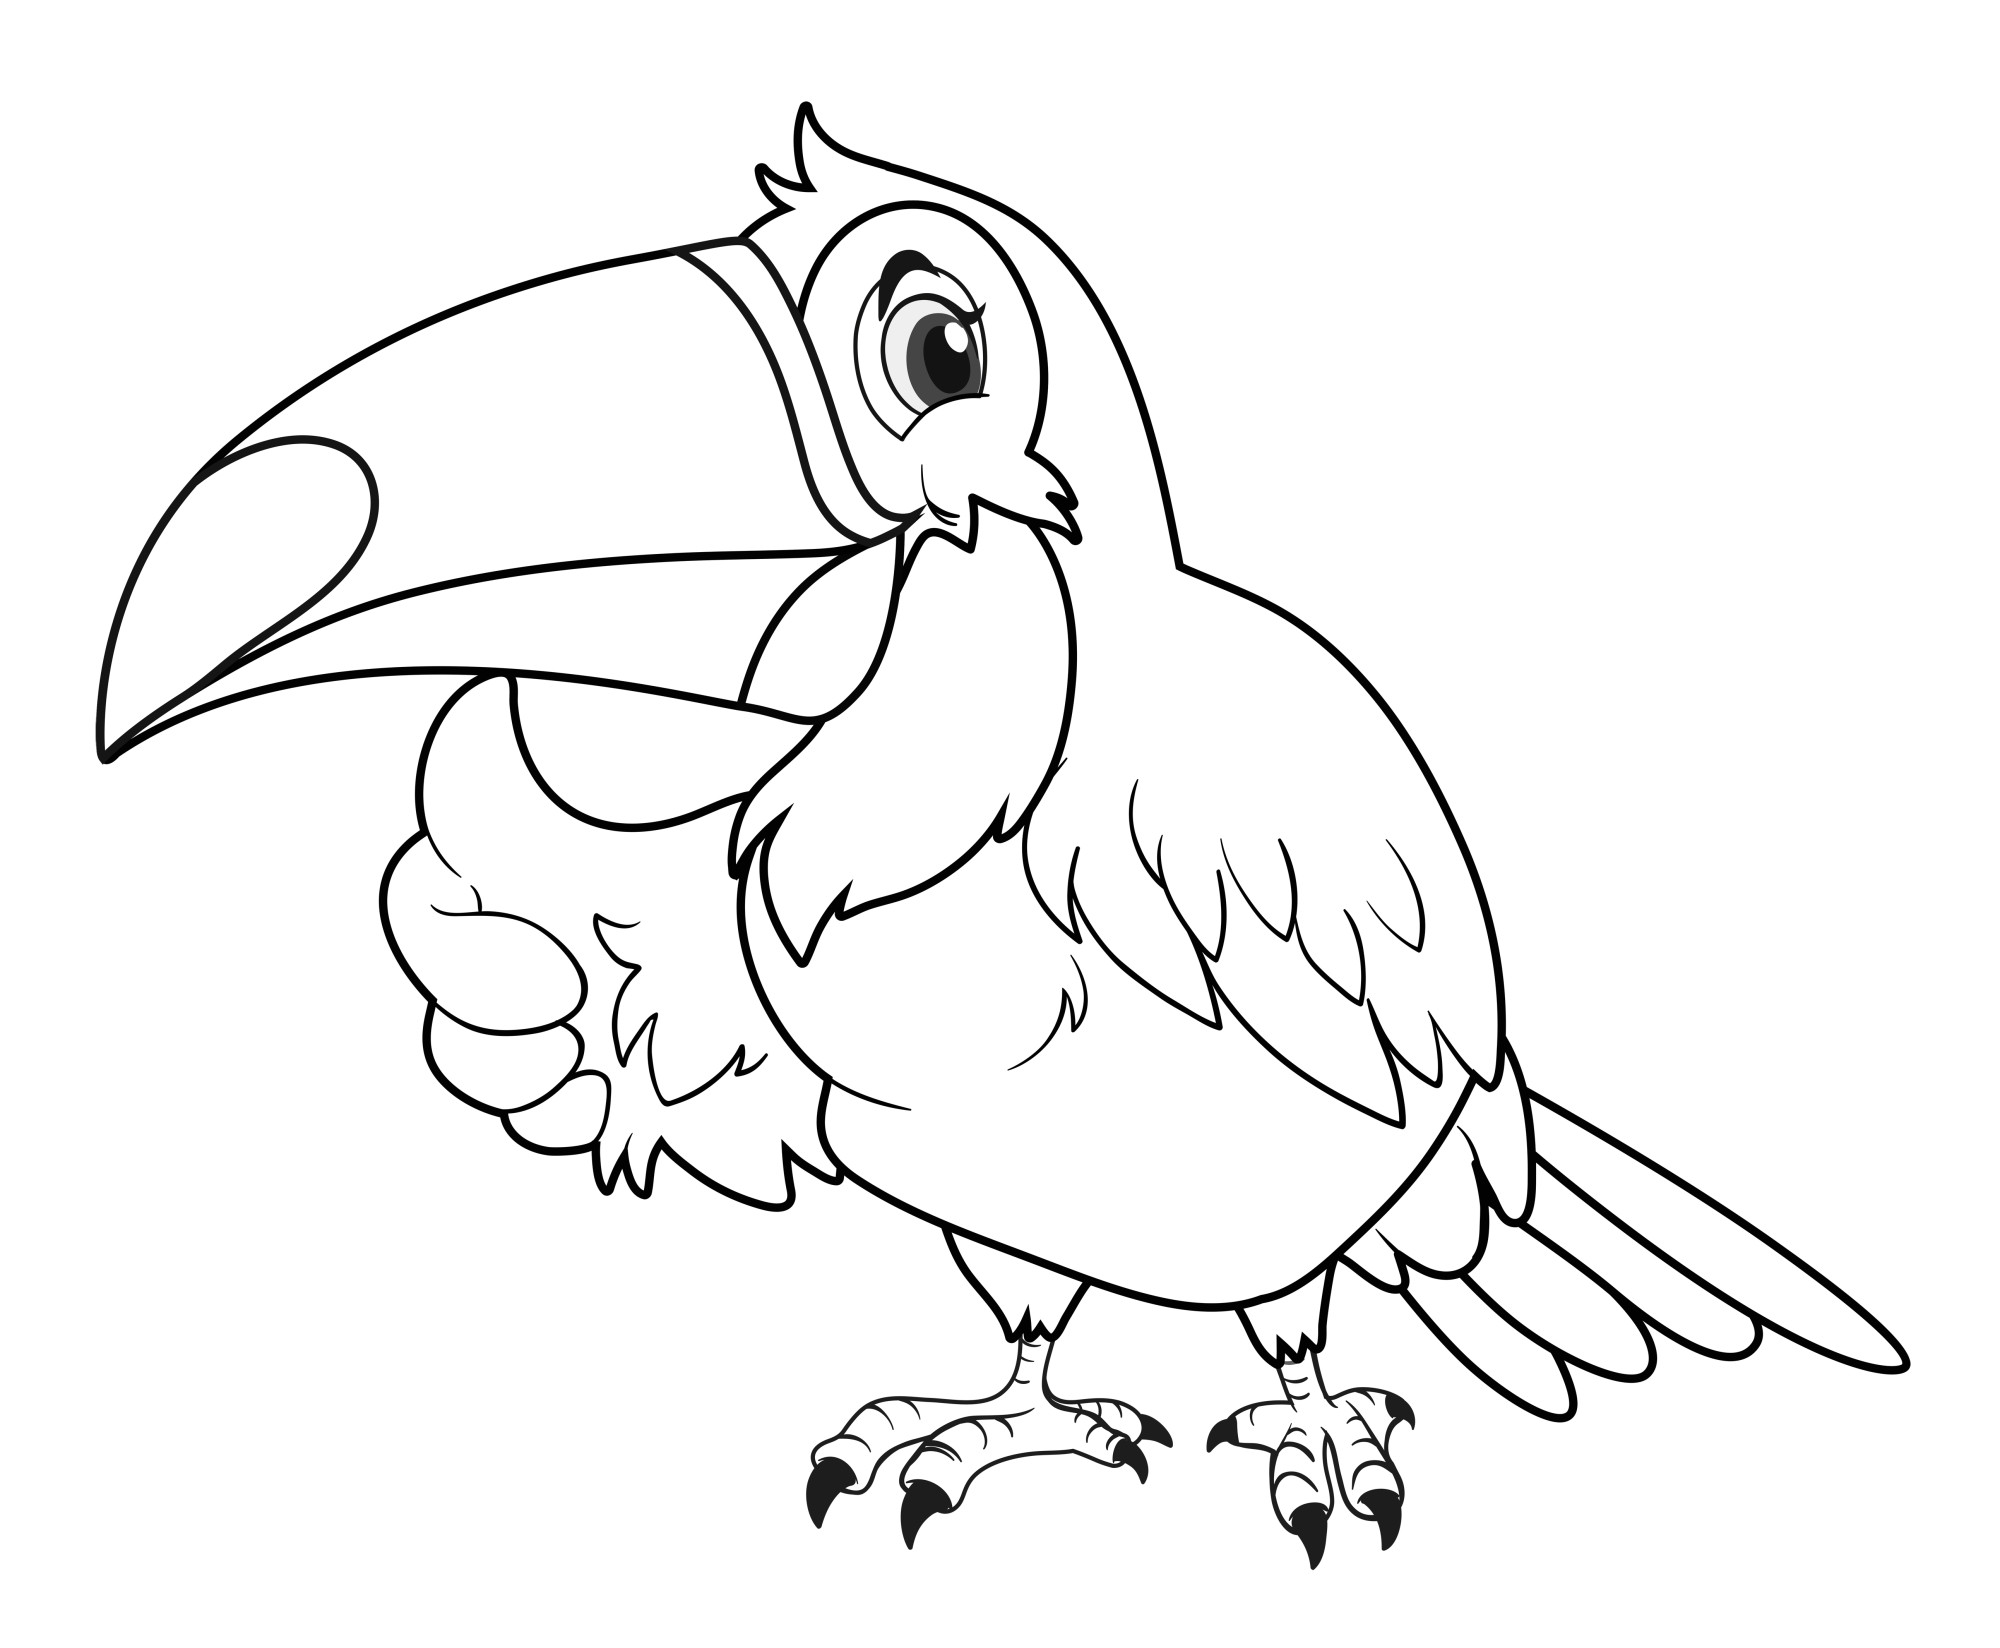 Раскраска для детей: мультяшная птица тукан с поднятым крылом